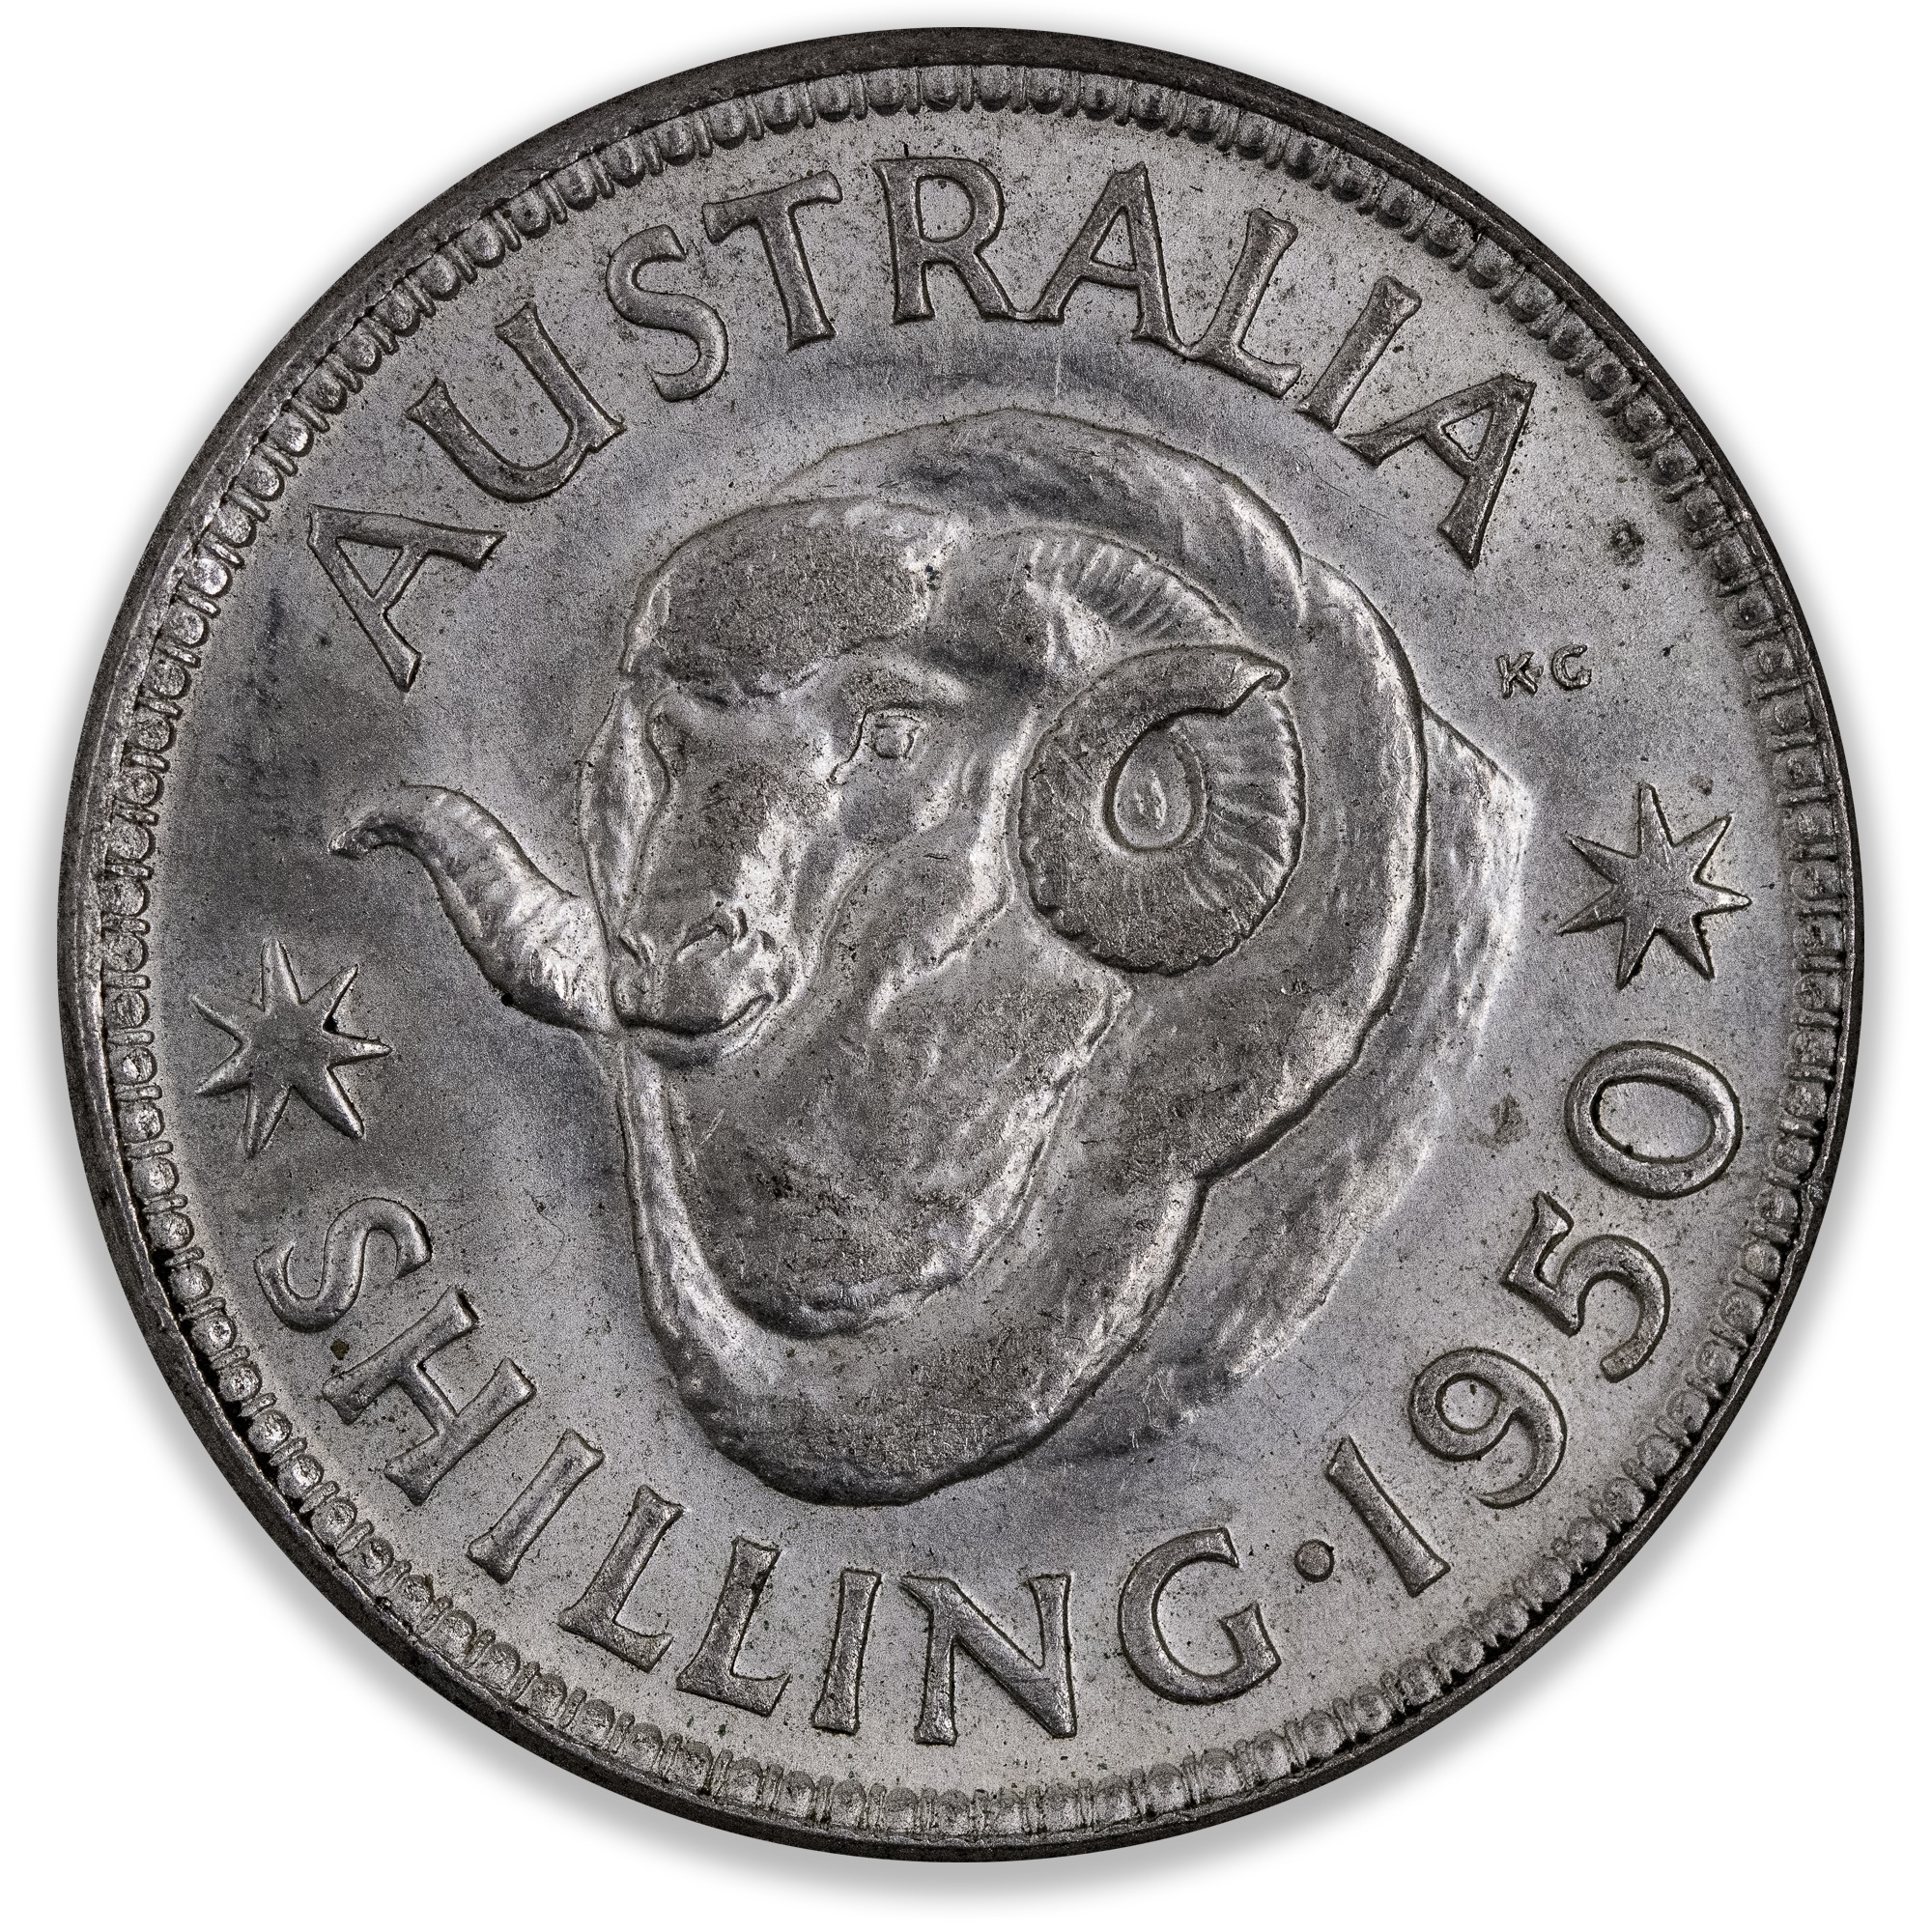 1950 Australian Shilling Nice Uncirculated/Chc Unc